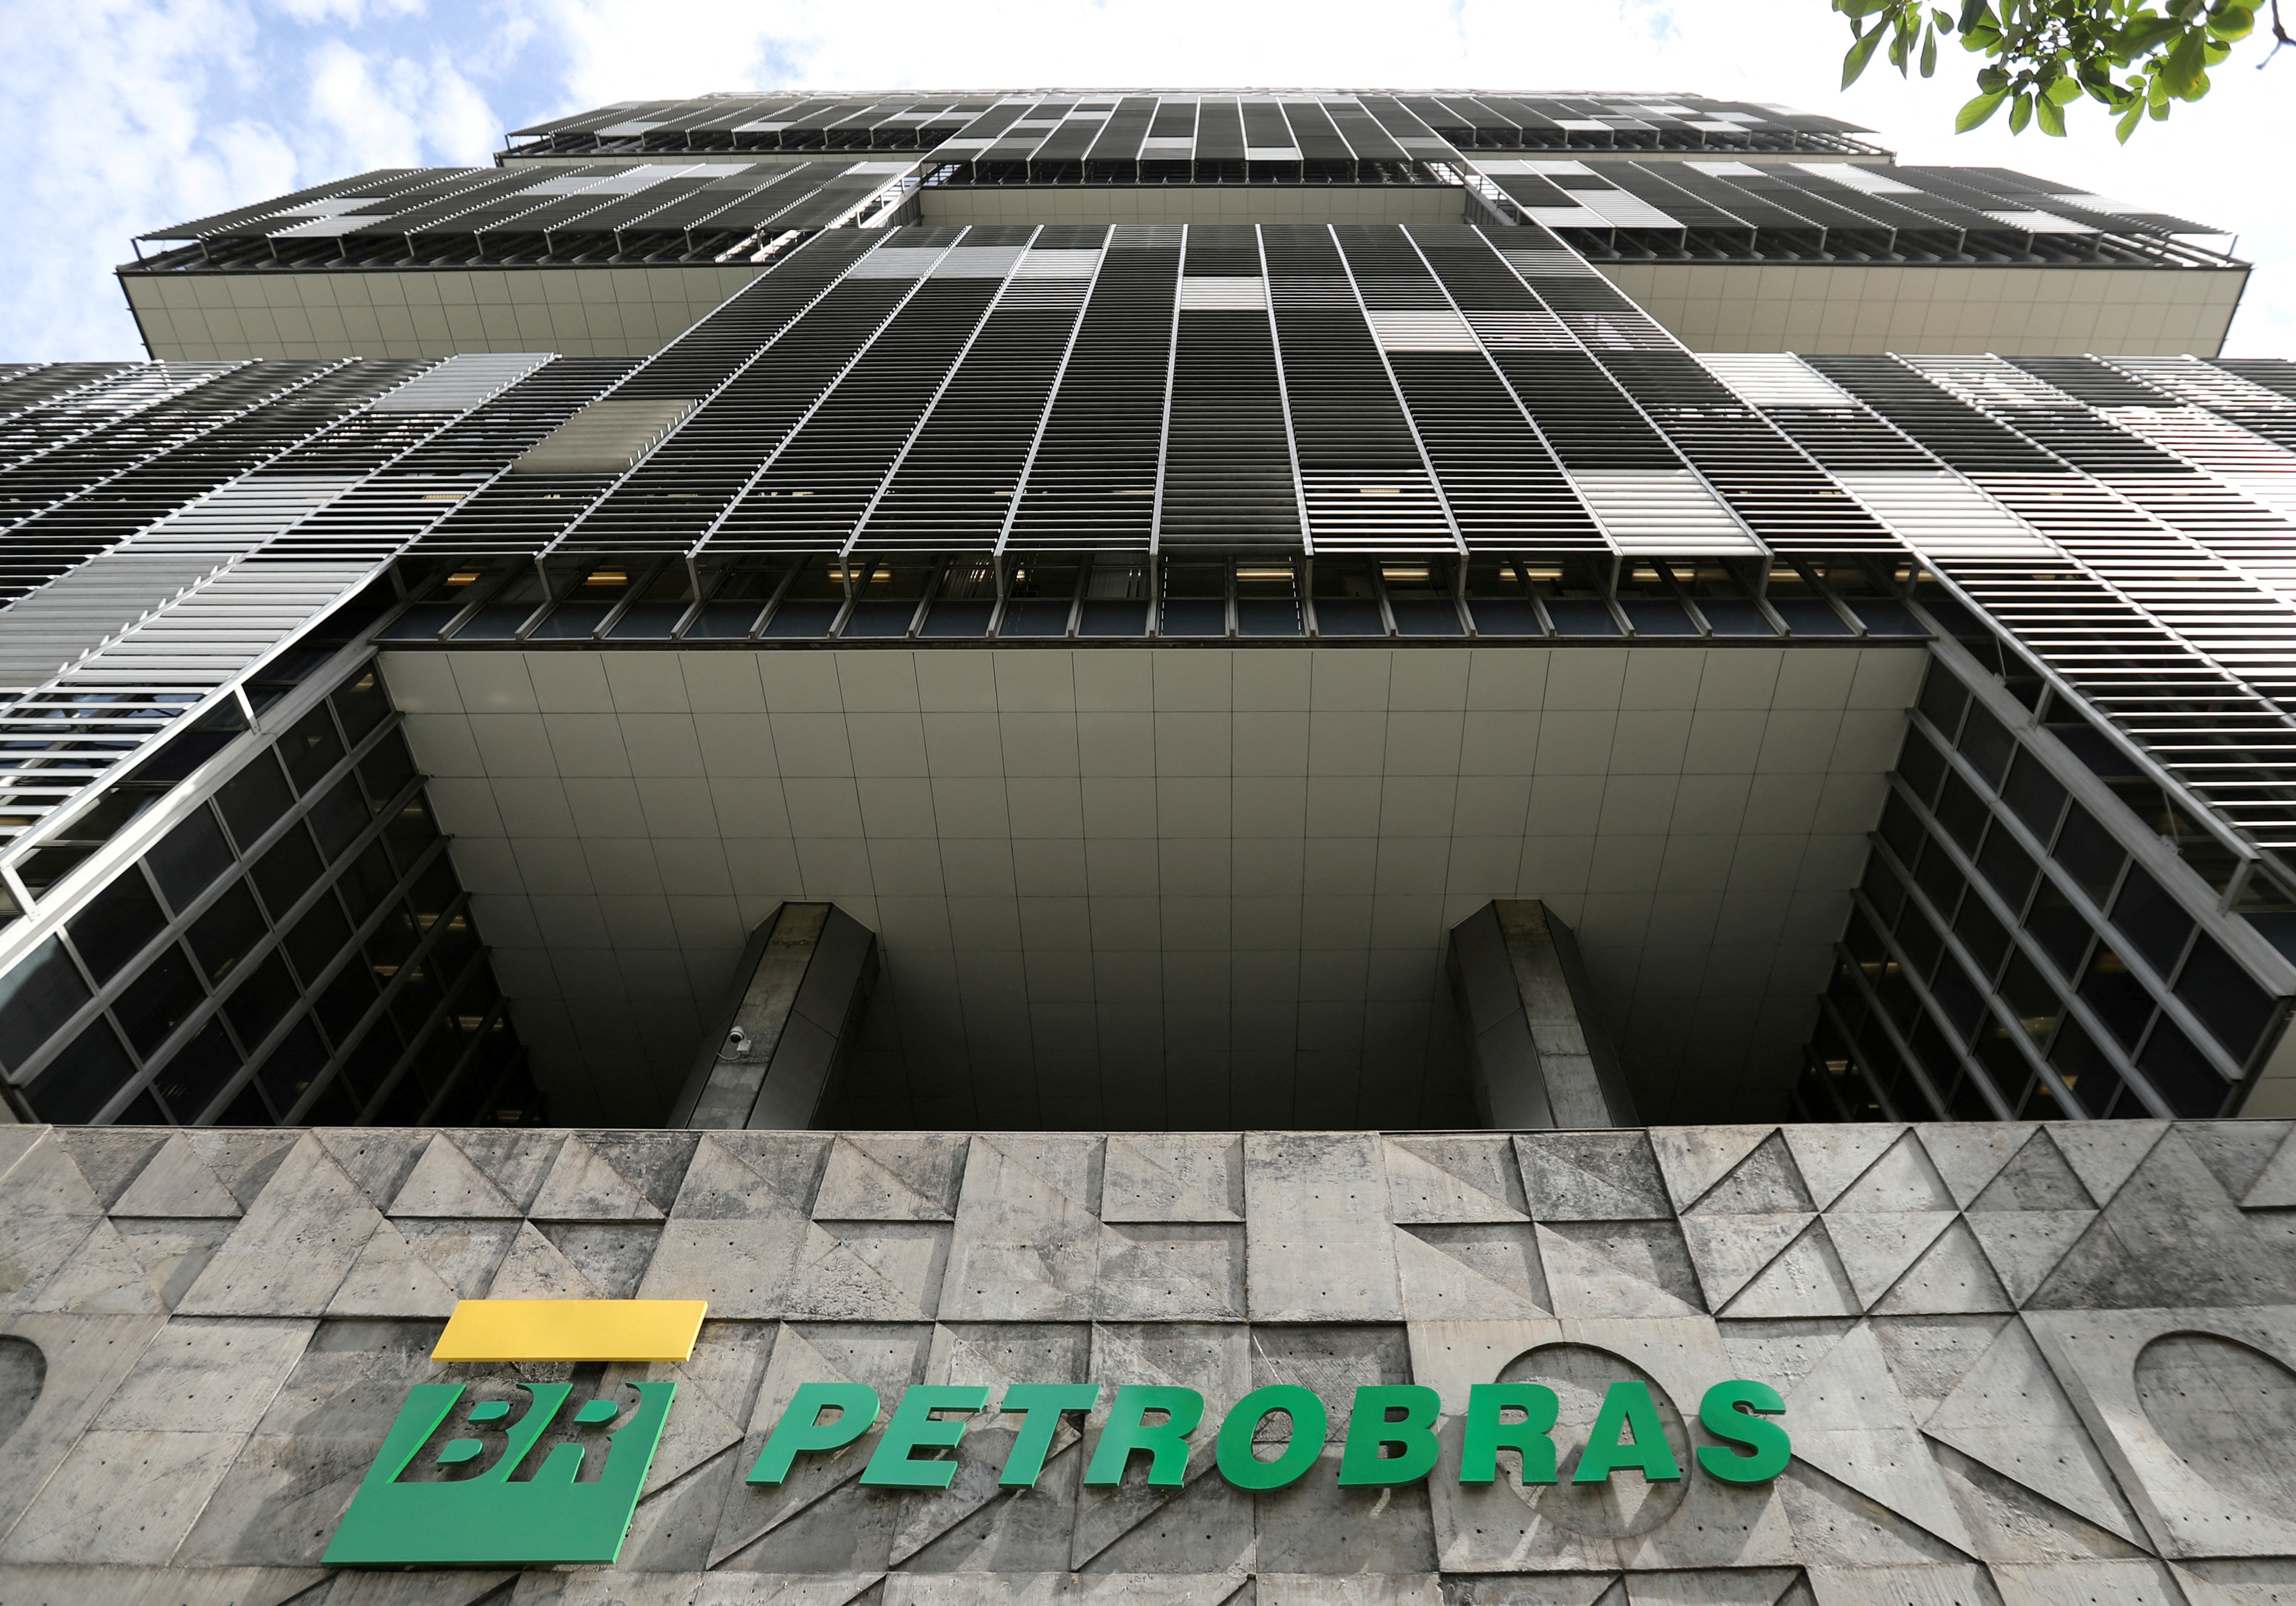 The facade of the headquarters of Petroleo Brasileiro S.A. (PETROBRAS) is pictured in Rio de Janeiro